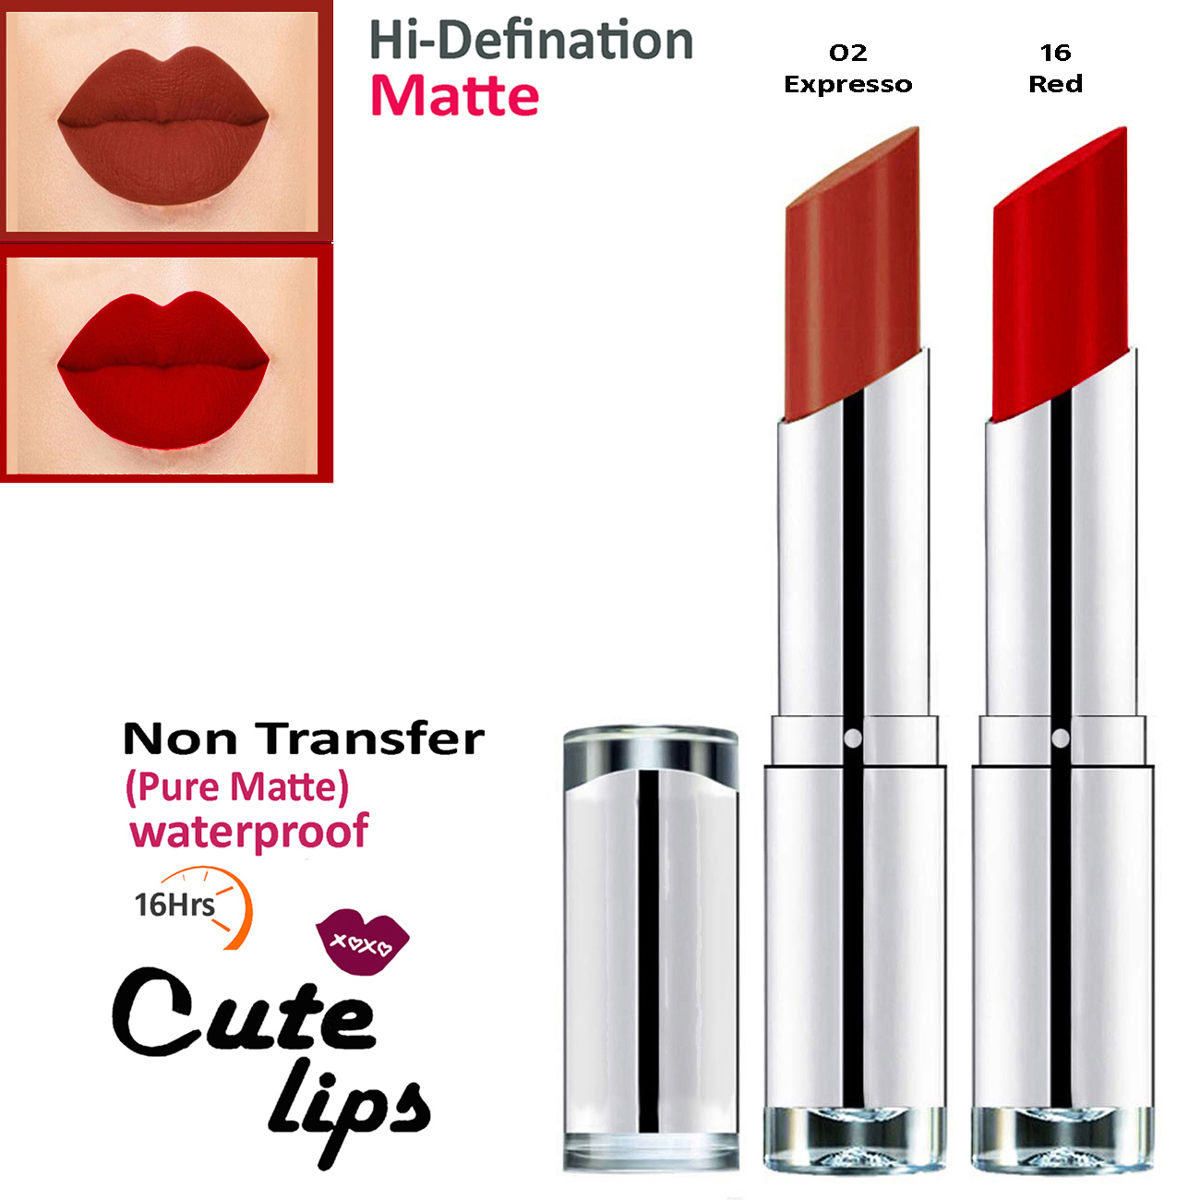 bq BLAQUE Cute Lips Non Transfer Matte Lipstick 2.4 gm each - 02 ...